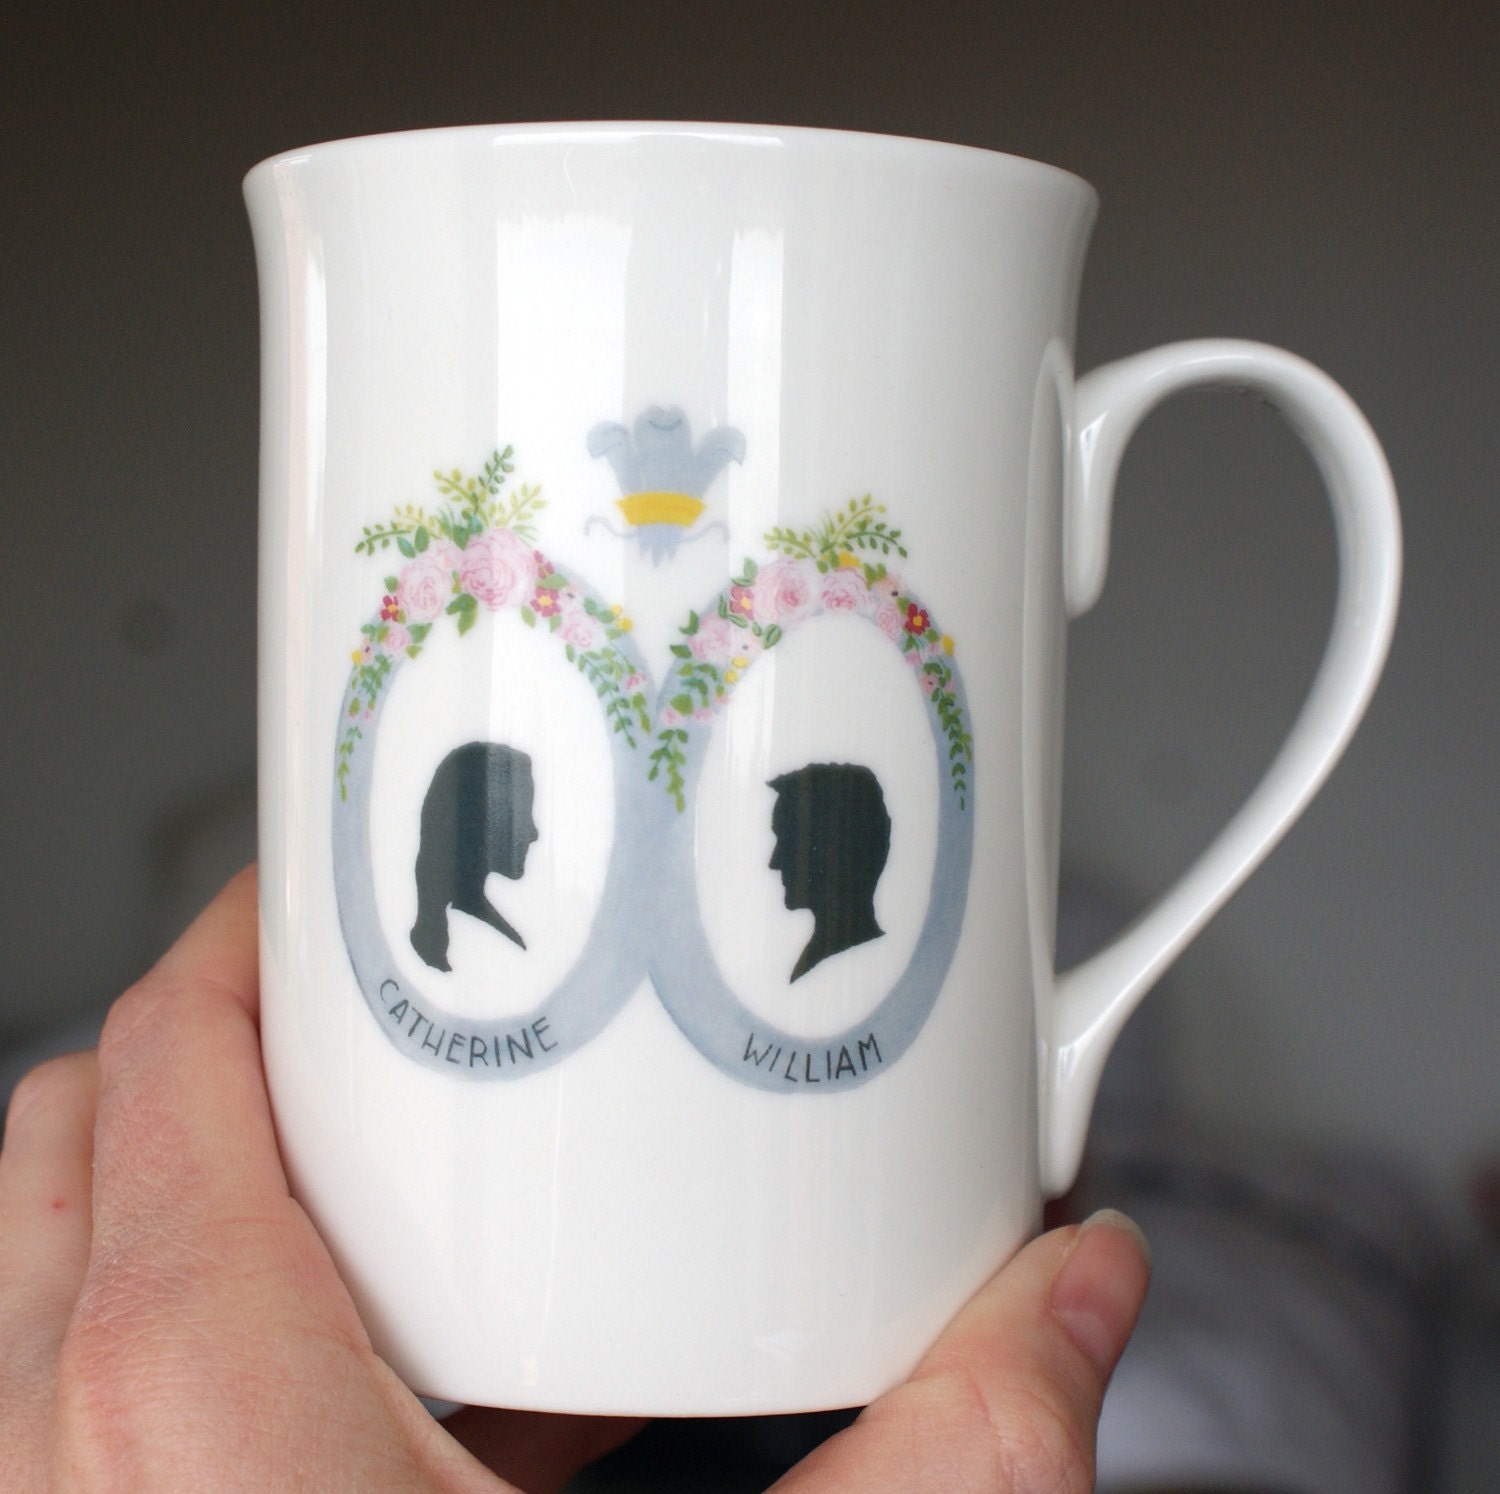 Pre-order Commemorative mug royal wedding of Prince William and Kate Middleton